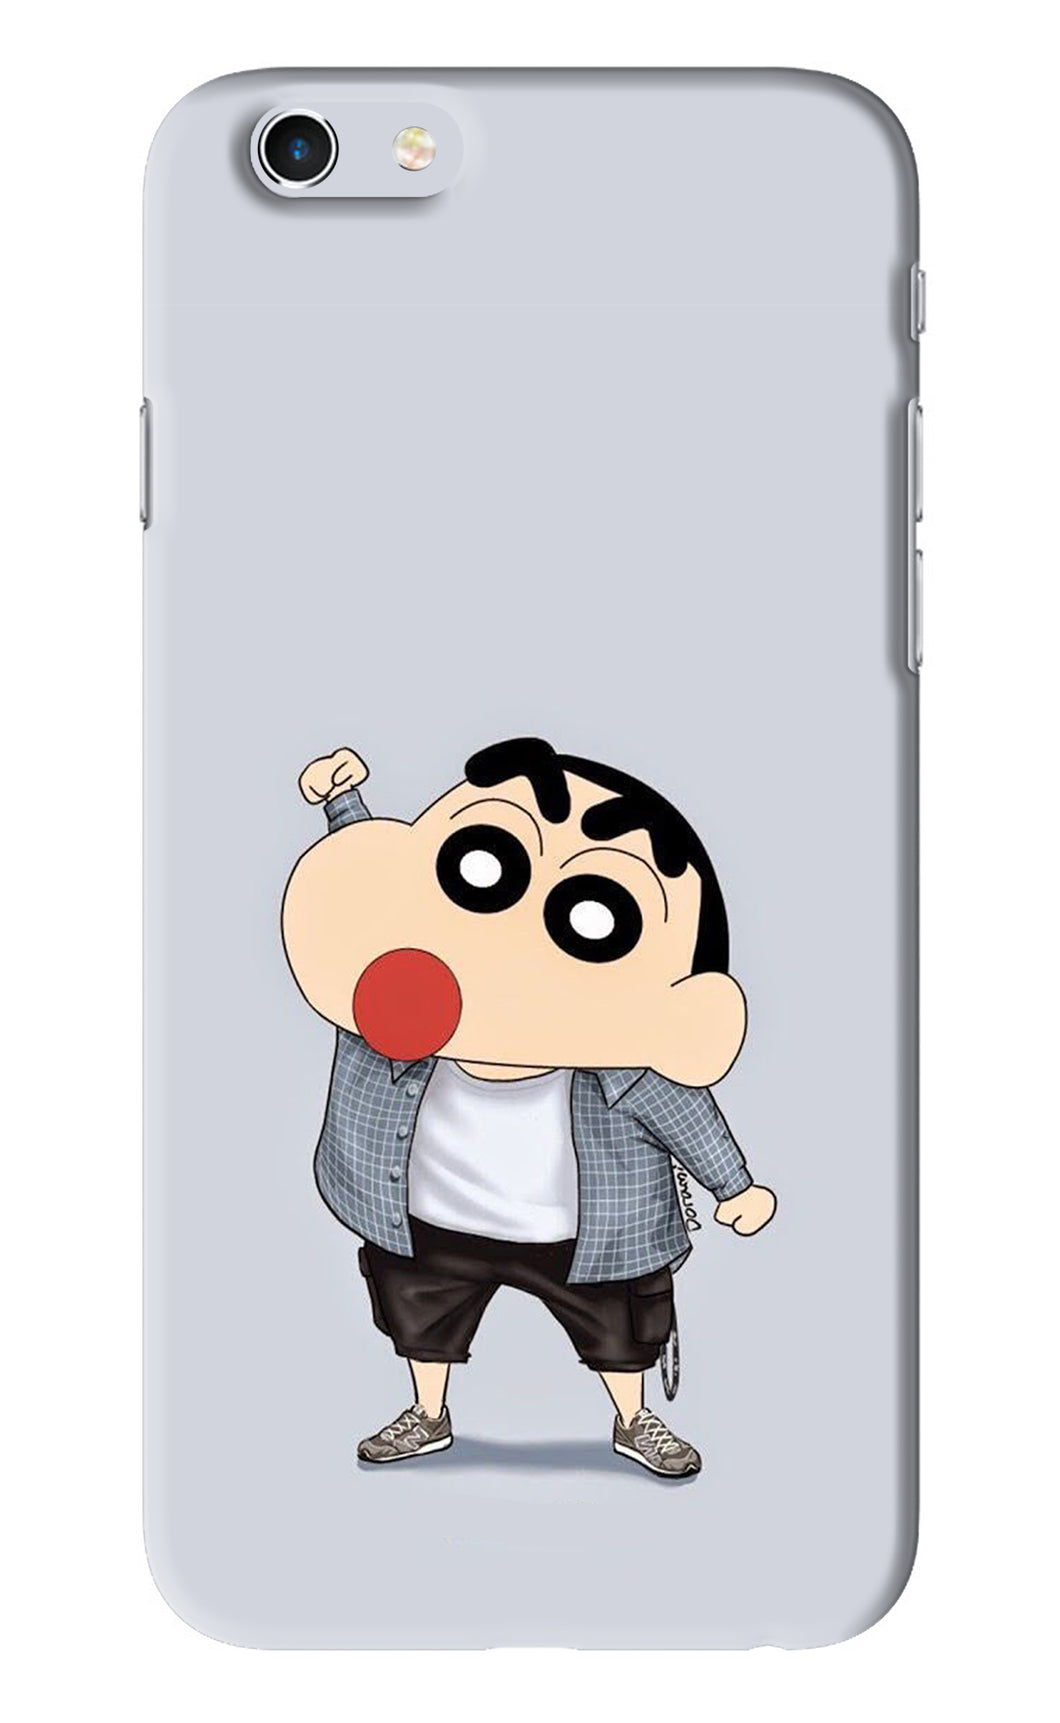 Shinchan iPhone 6S Back Skin Wrap